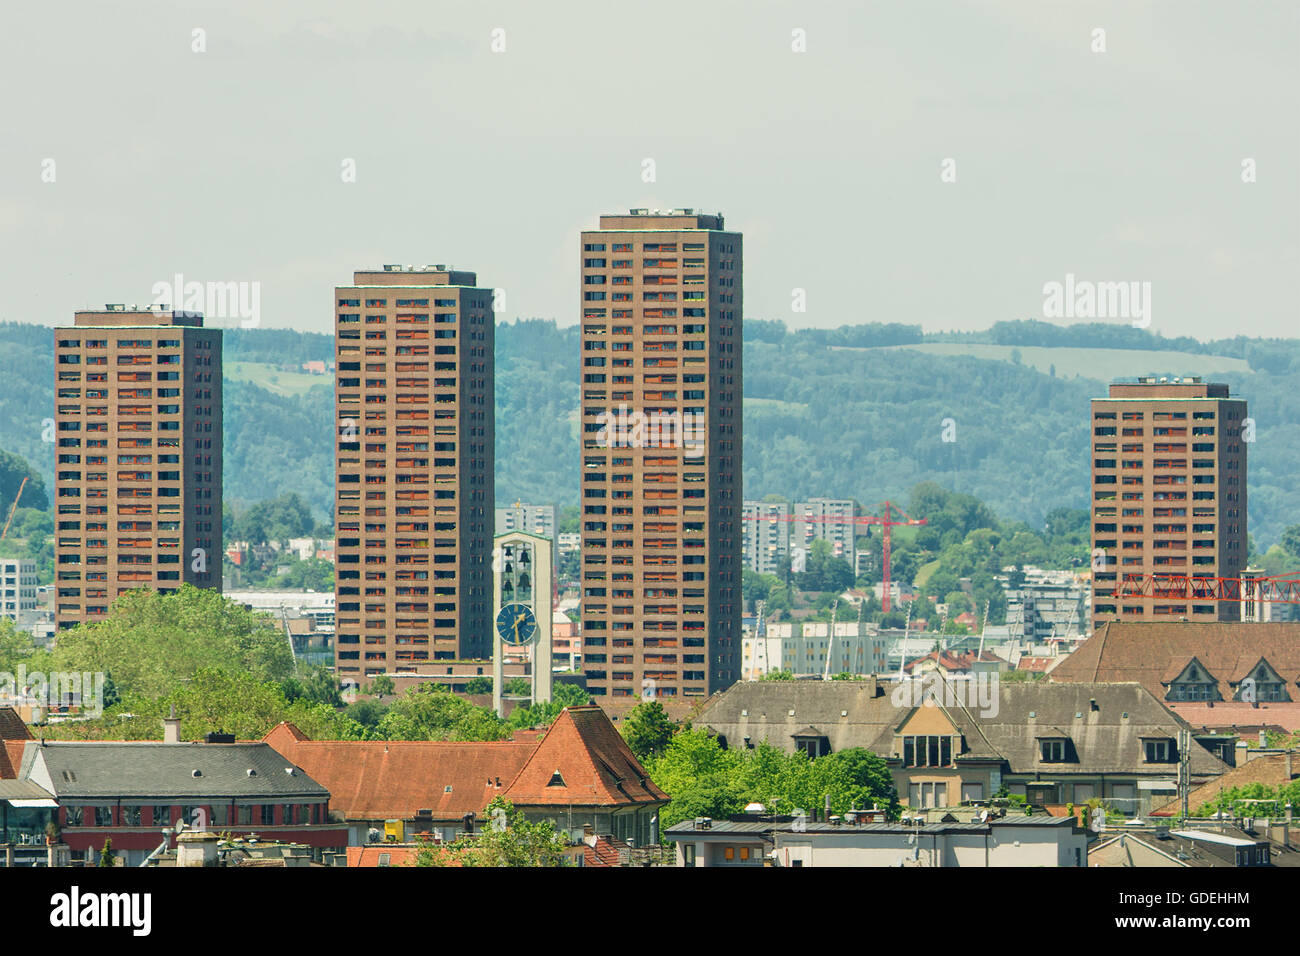 City skyline with high rise apartment blocks, Zurich, switzerland Stock Photo